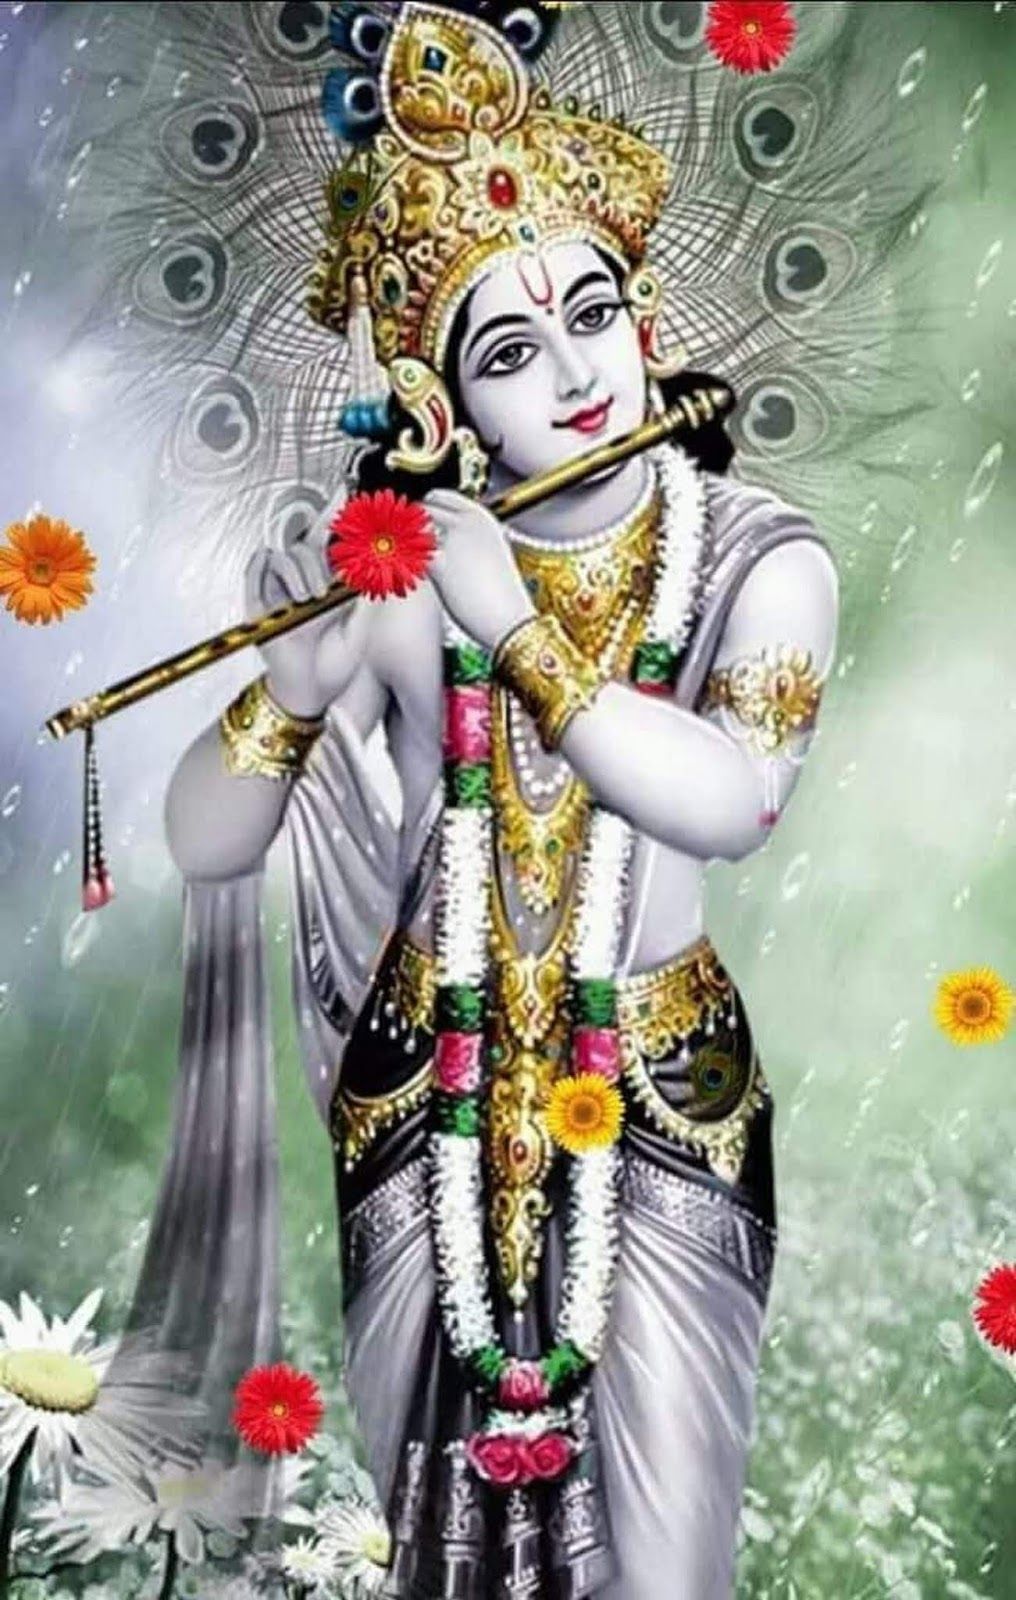 Lord Radha Krishna Love Image (2021) Full Size Photo Gallery of Shri God. Happy New Year 2021